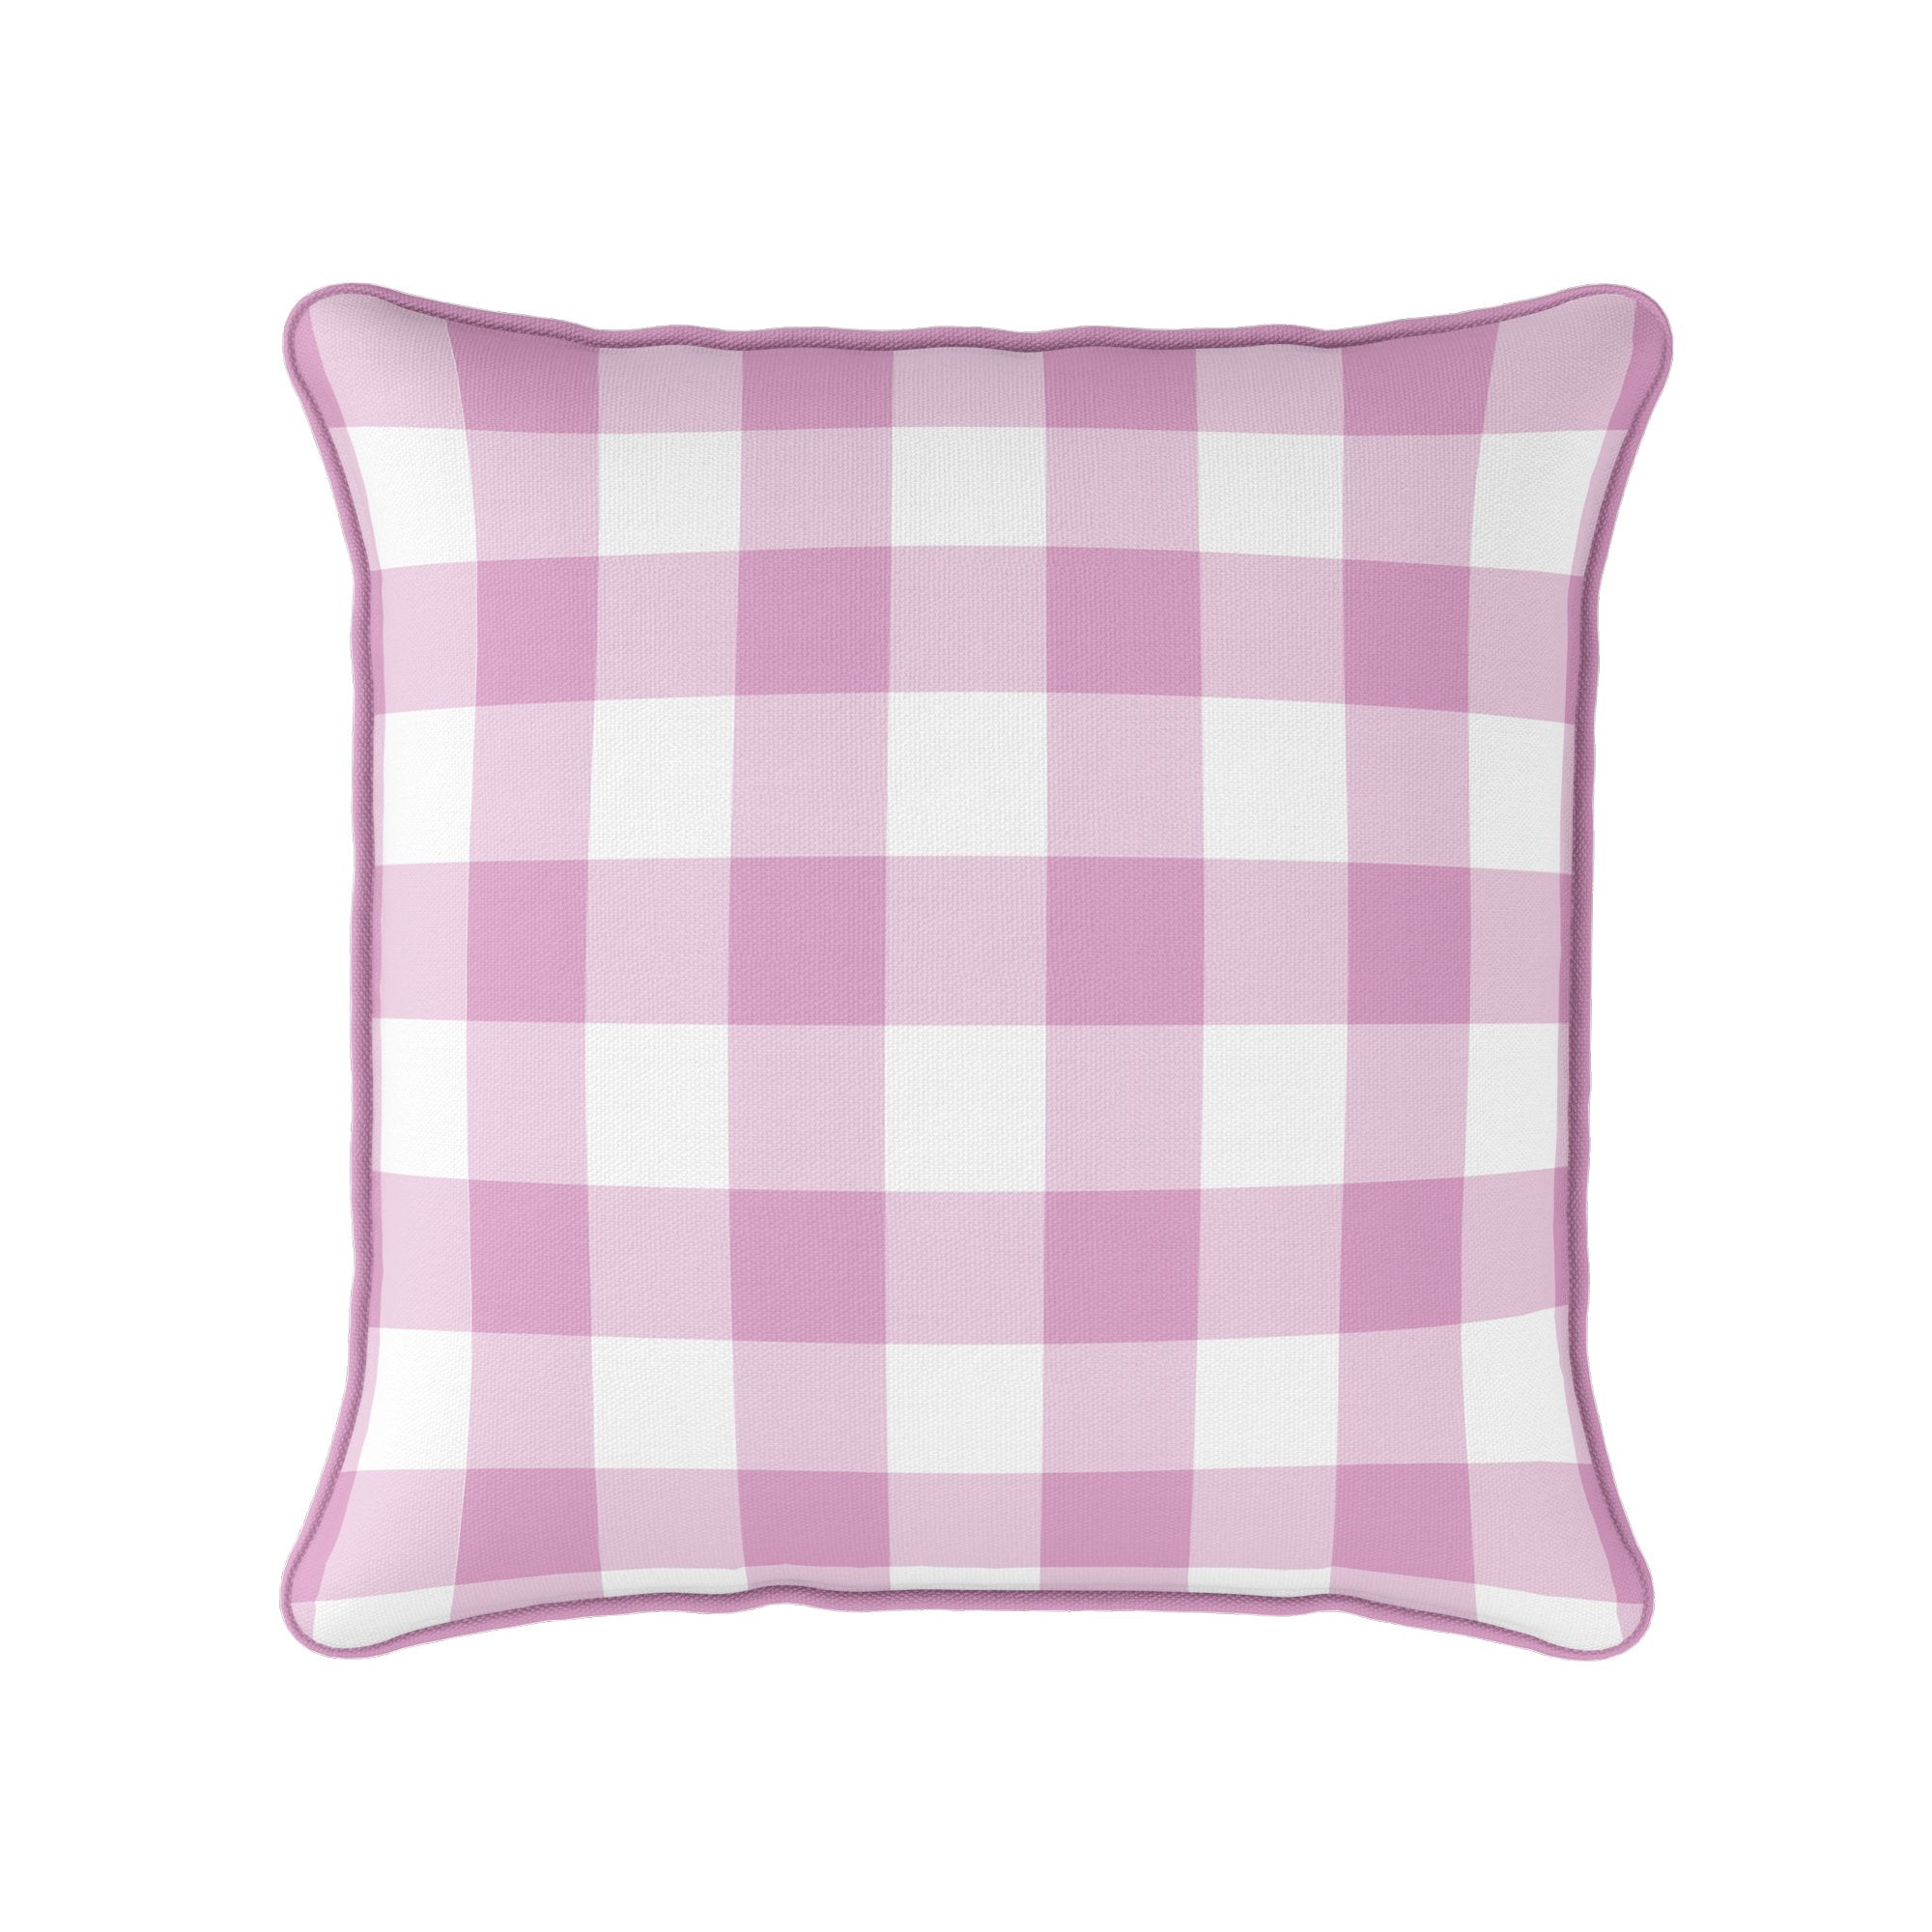 Gingham Check Medium Cushion - Pinks - Hydrangea Lane Home